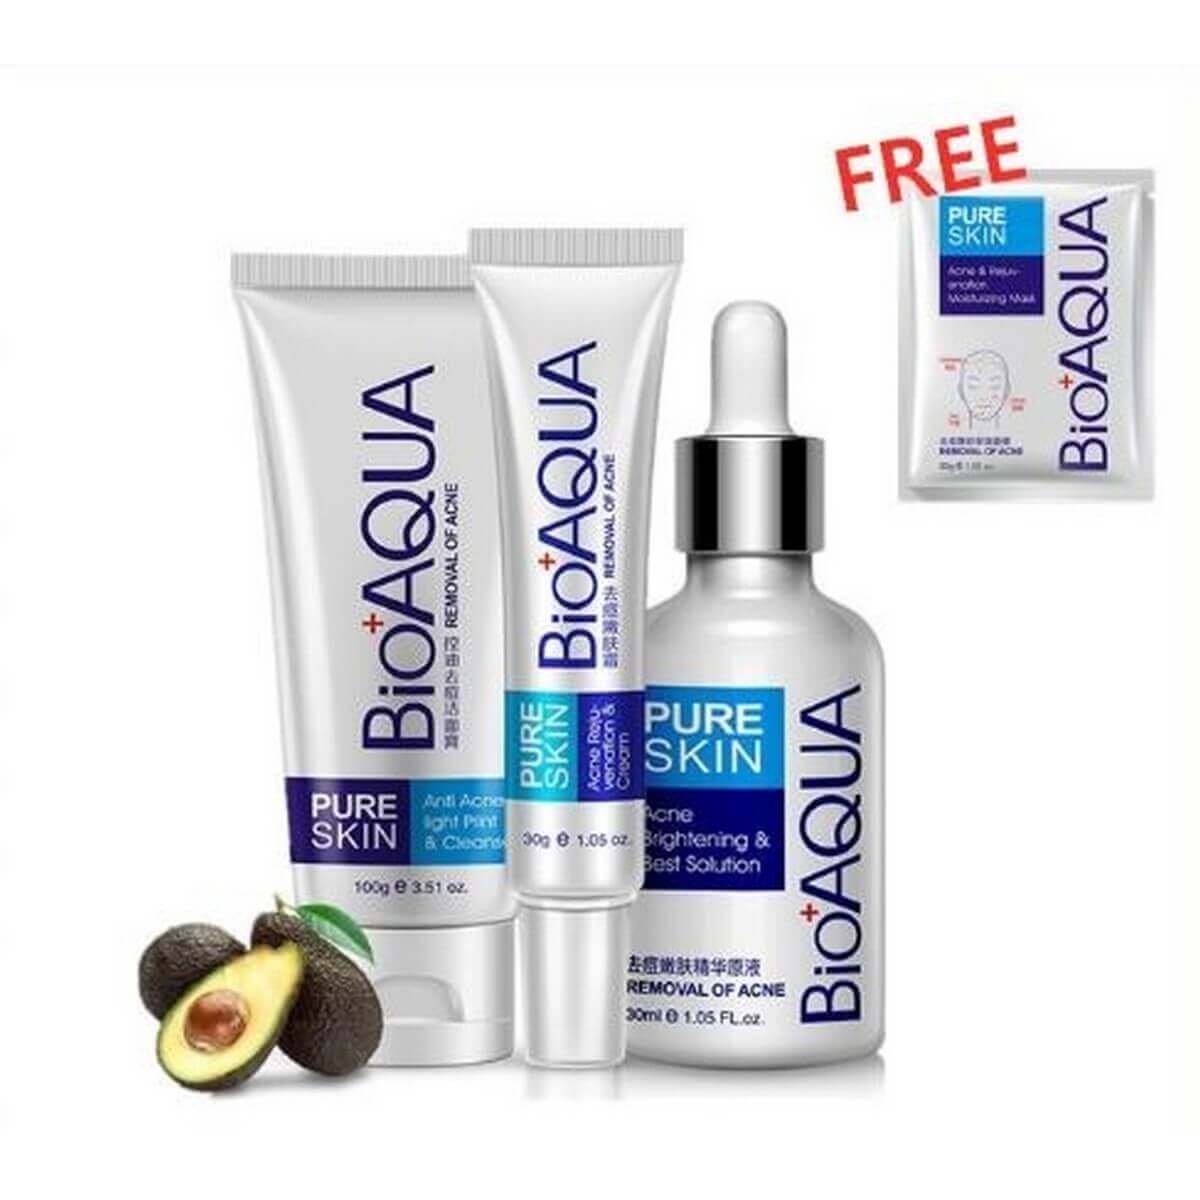 bioaqua pure skin acne brightening best solution